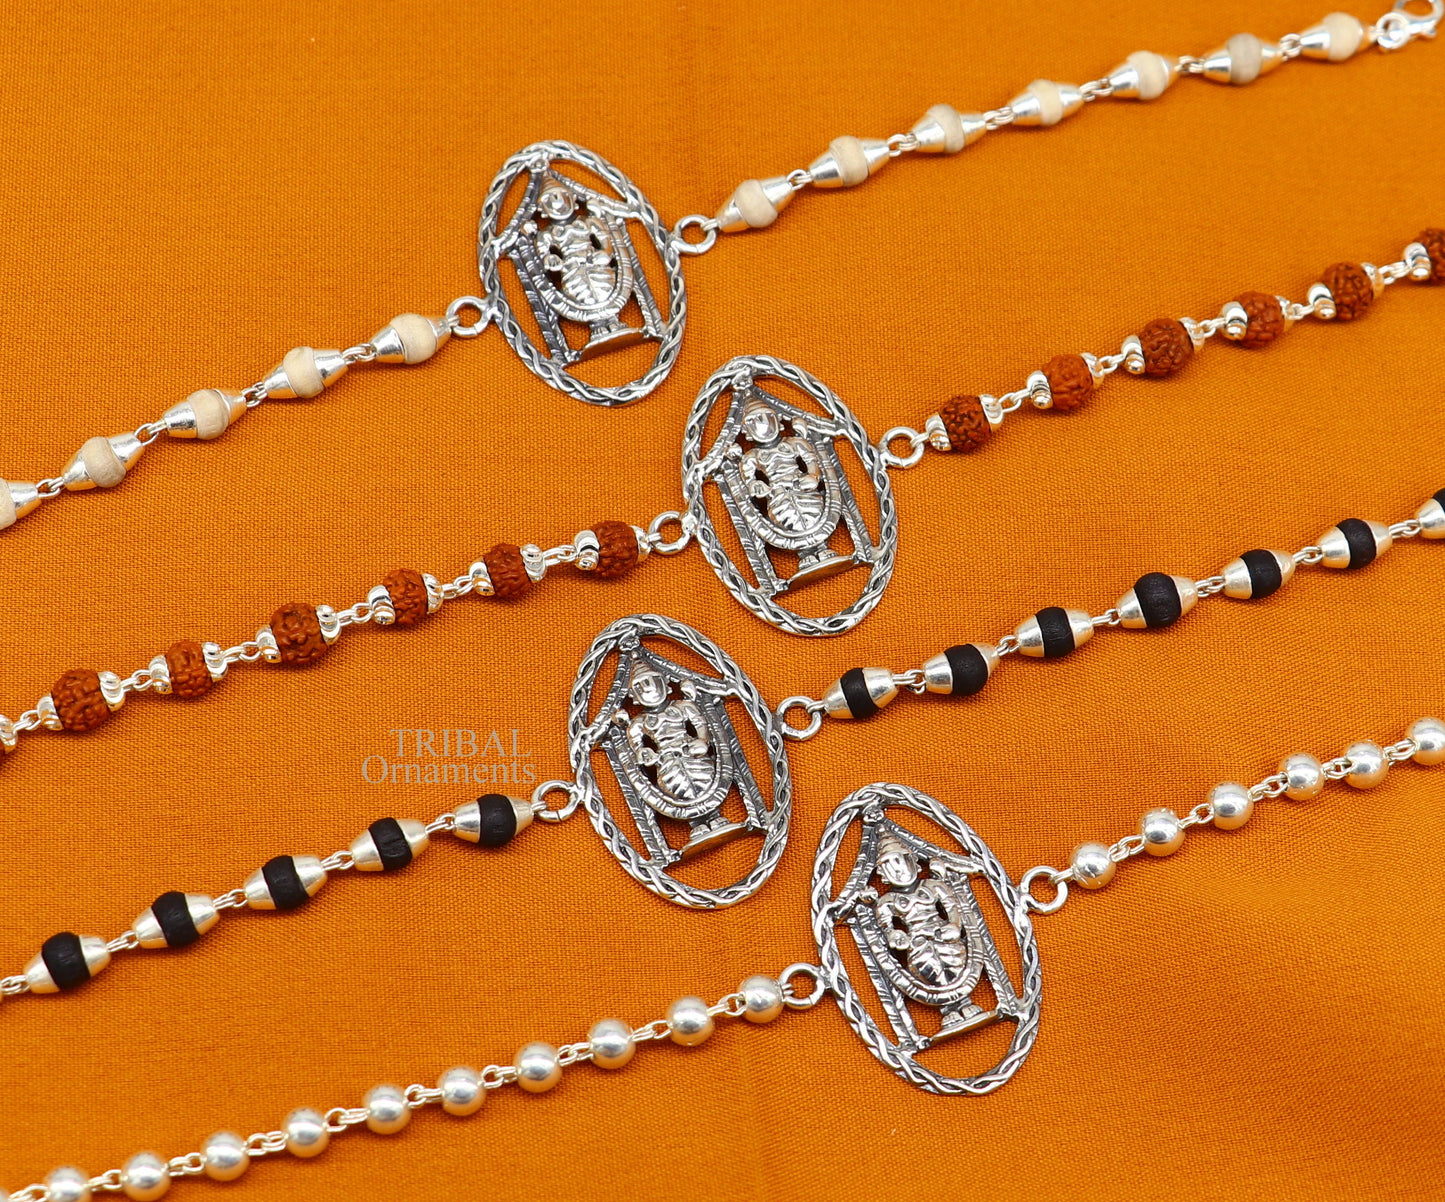 925 sterling silver handmade Lord Krishna on betel leaf Rakhi bracelet amazing Rudraksha or Tulsi beaded bracelet, daily use jewelry rk188 - TRIBAL ORNAMENTS